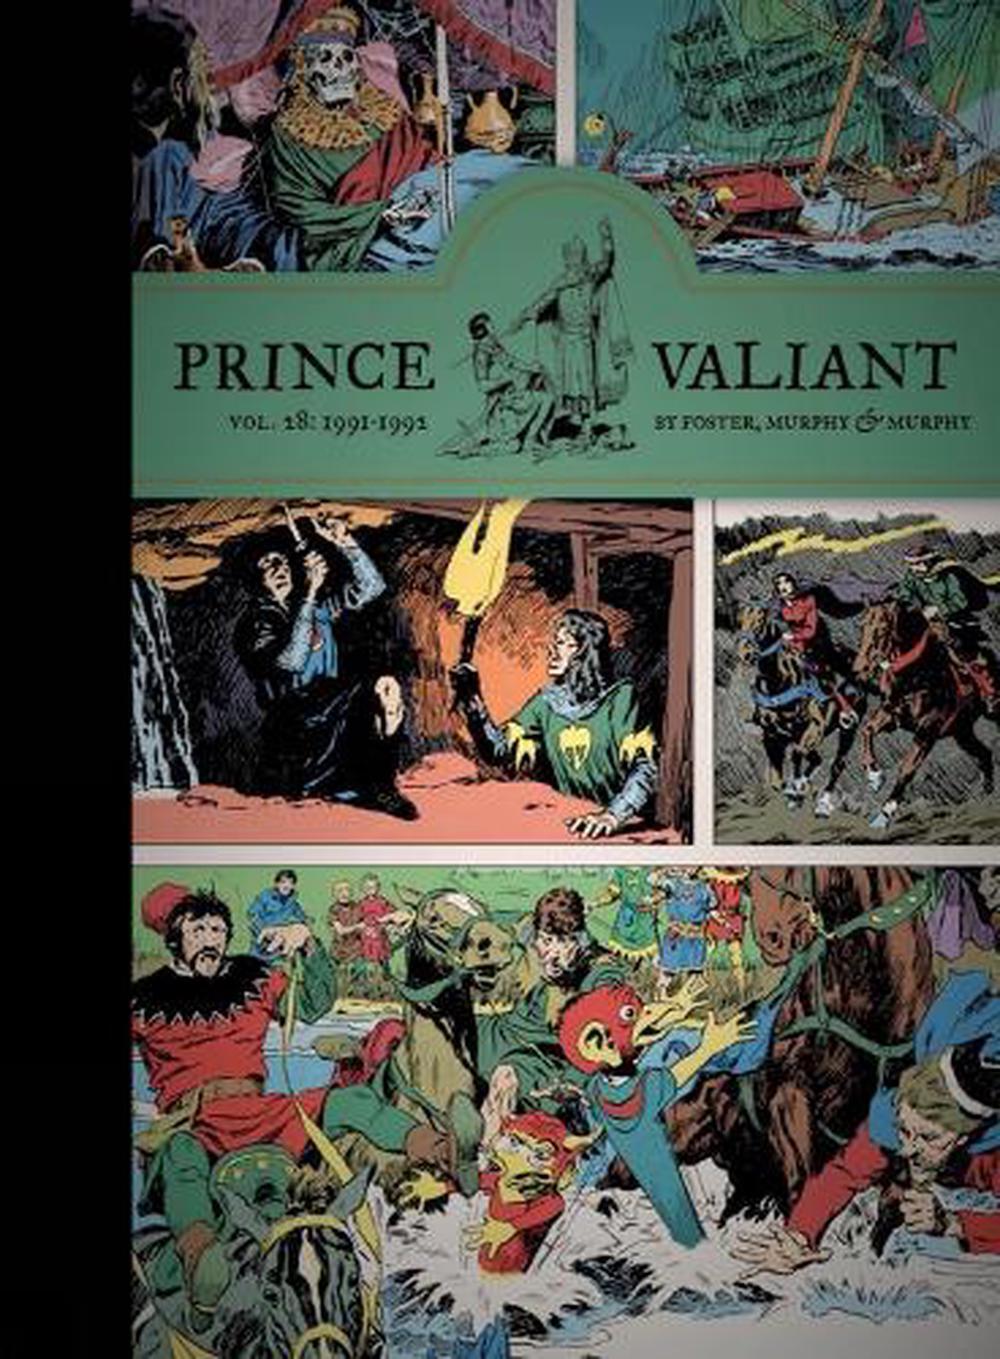 Prince Valiant Vol. 28: 1991-1992: 1991-1992 (Prince Valiant) by Hal Foster Hard